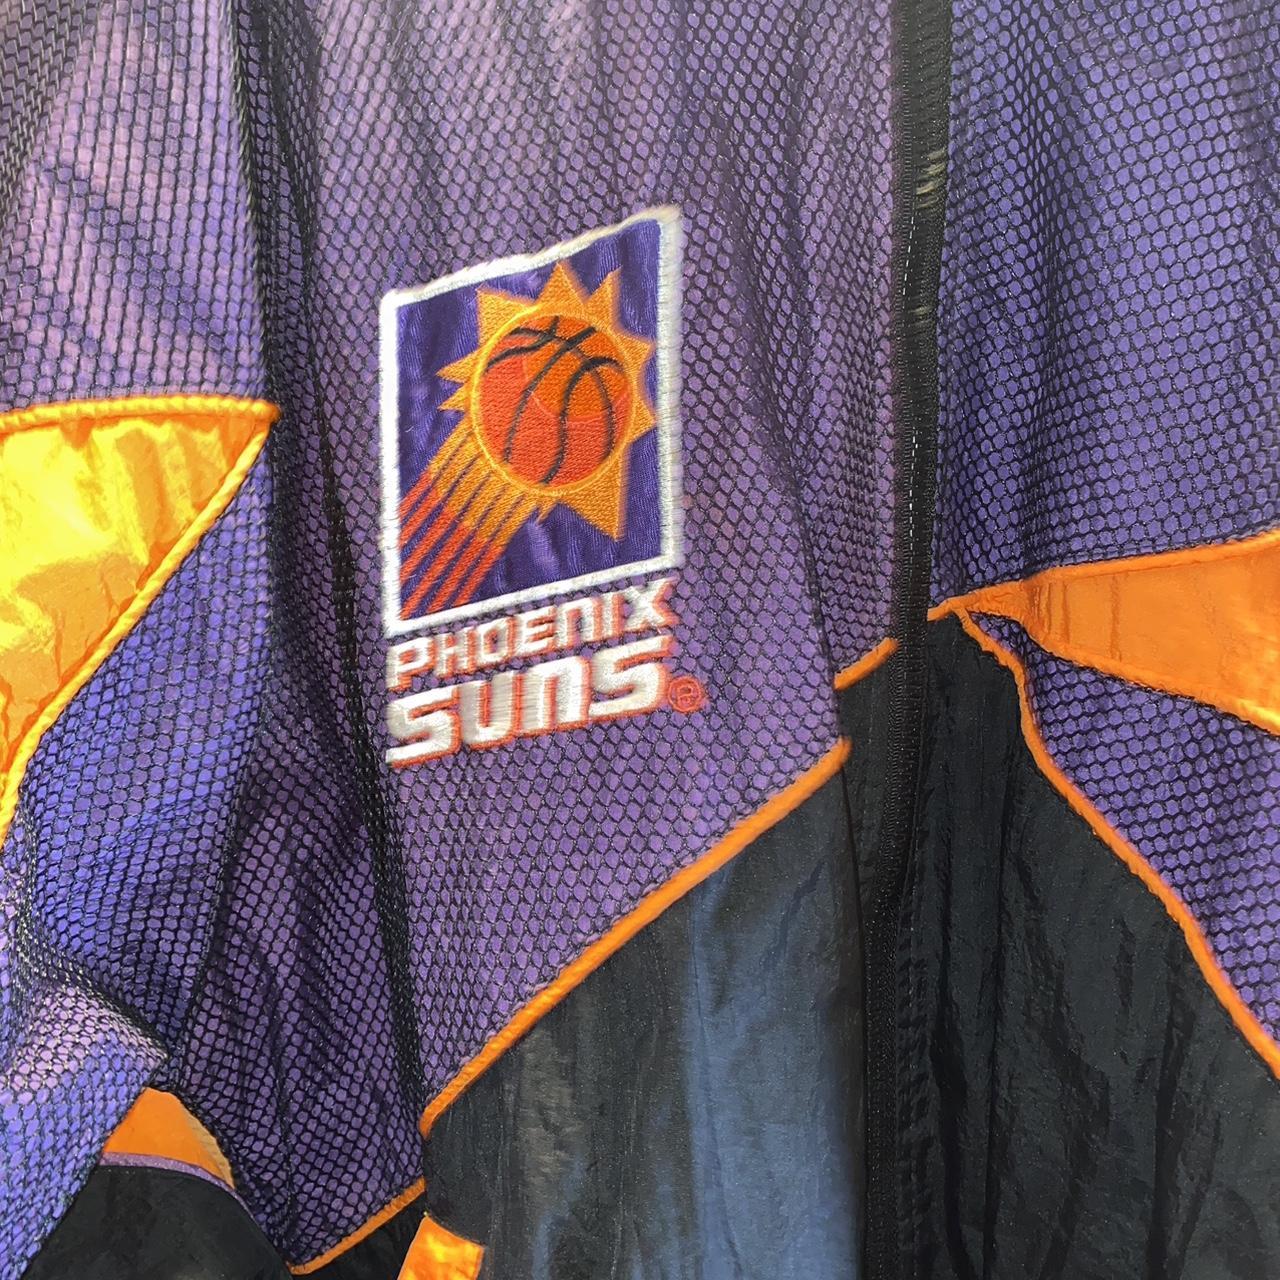 Phoenix Suns Pro Player (L) – Retro Windbreakers